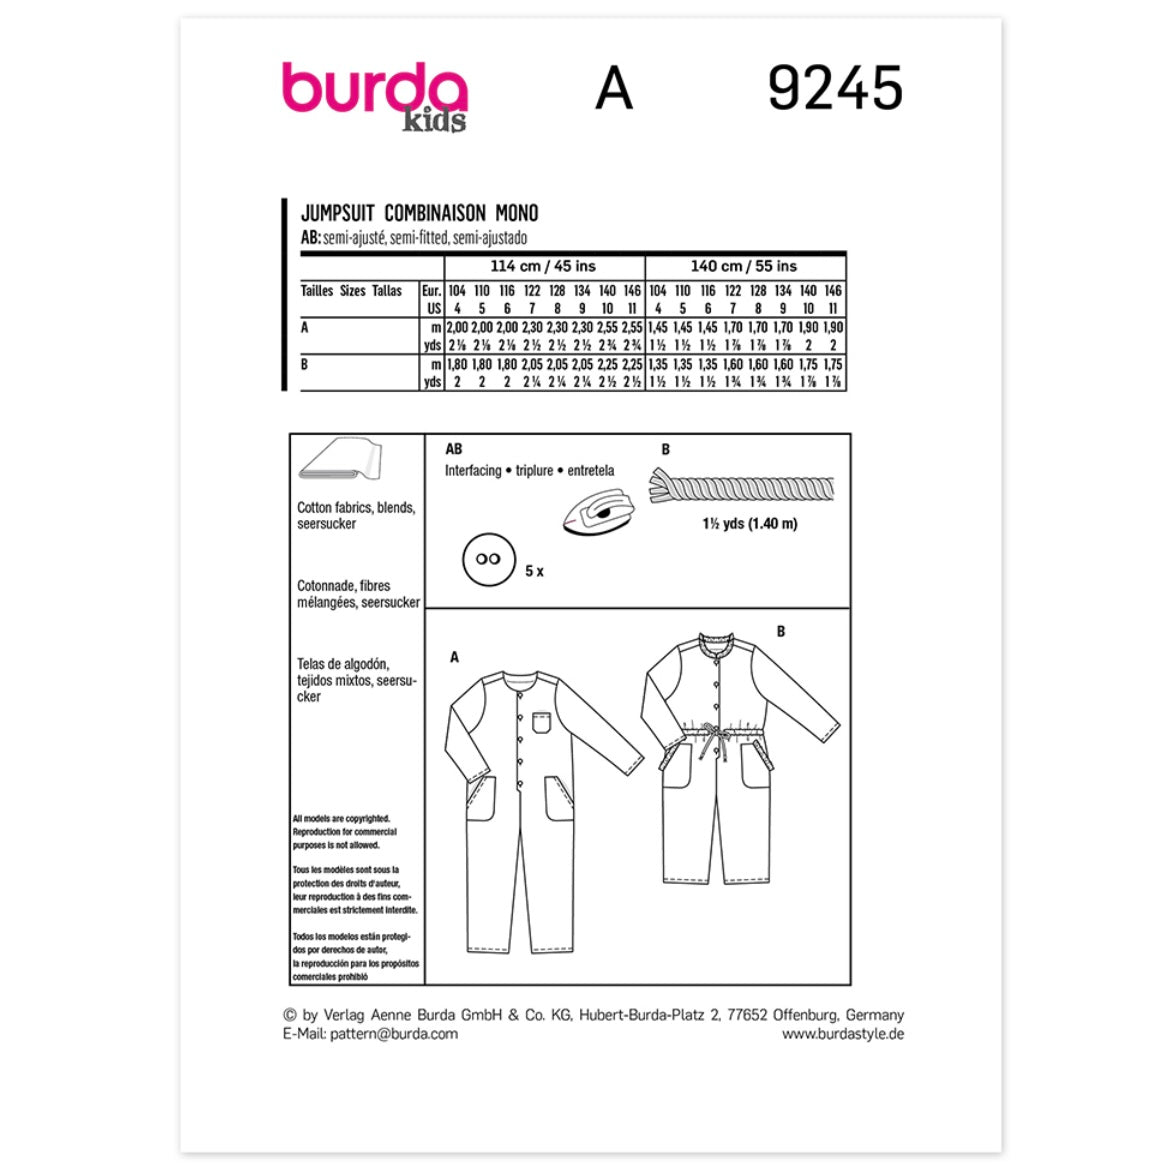 Burda Kids 9245 - Child Jumpsuit Sewing Pattern